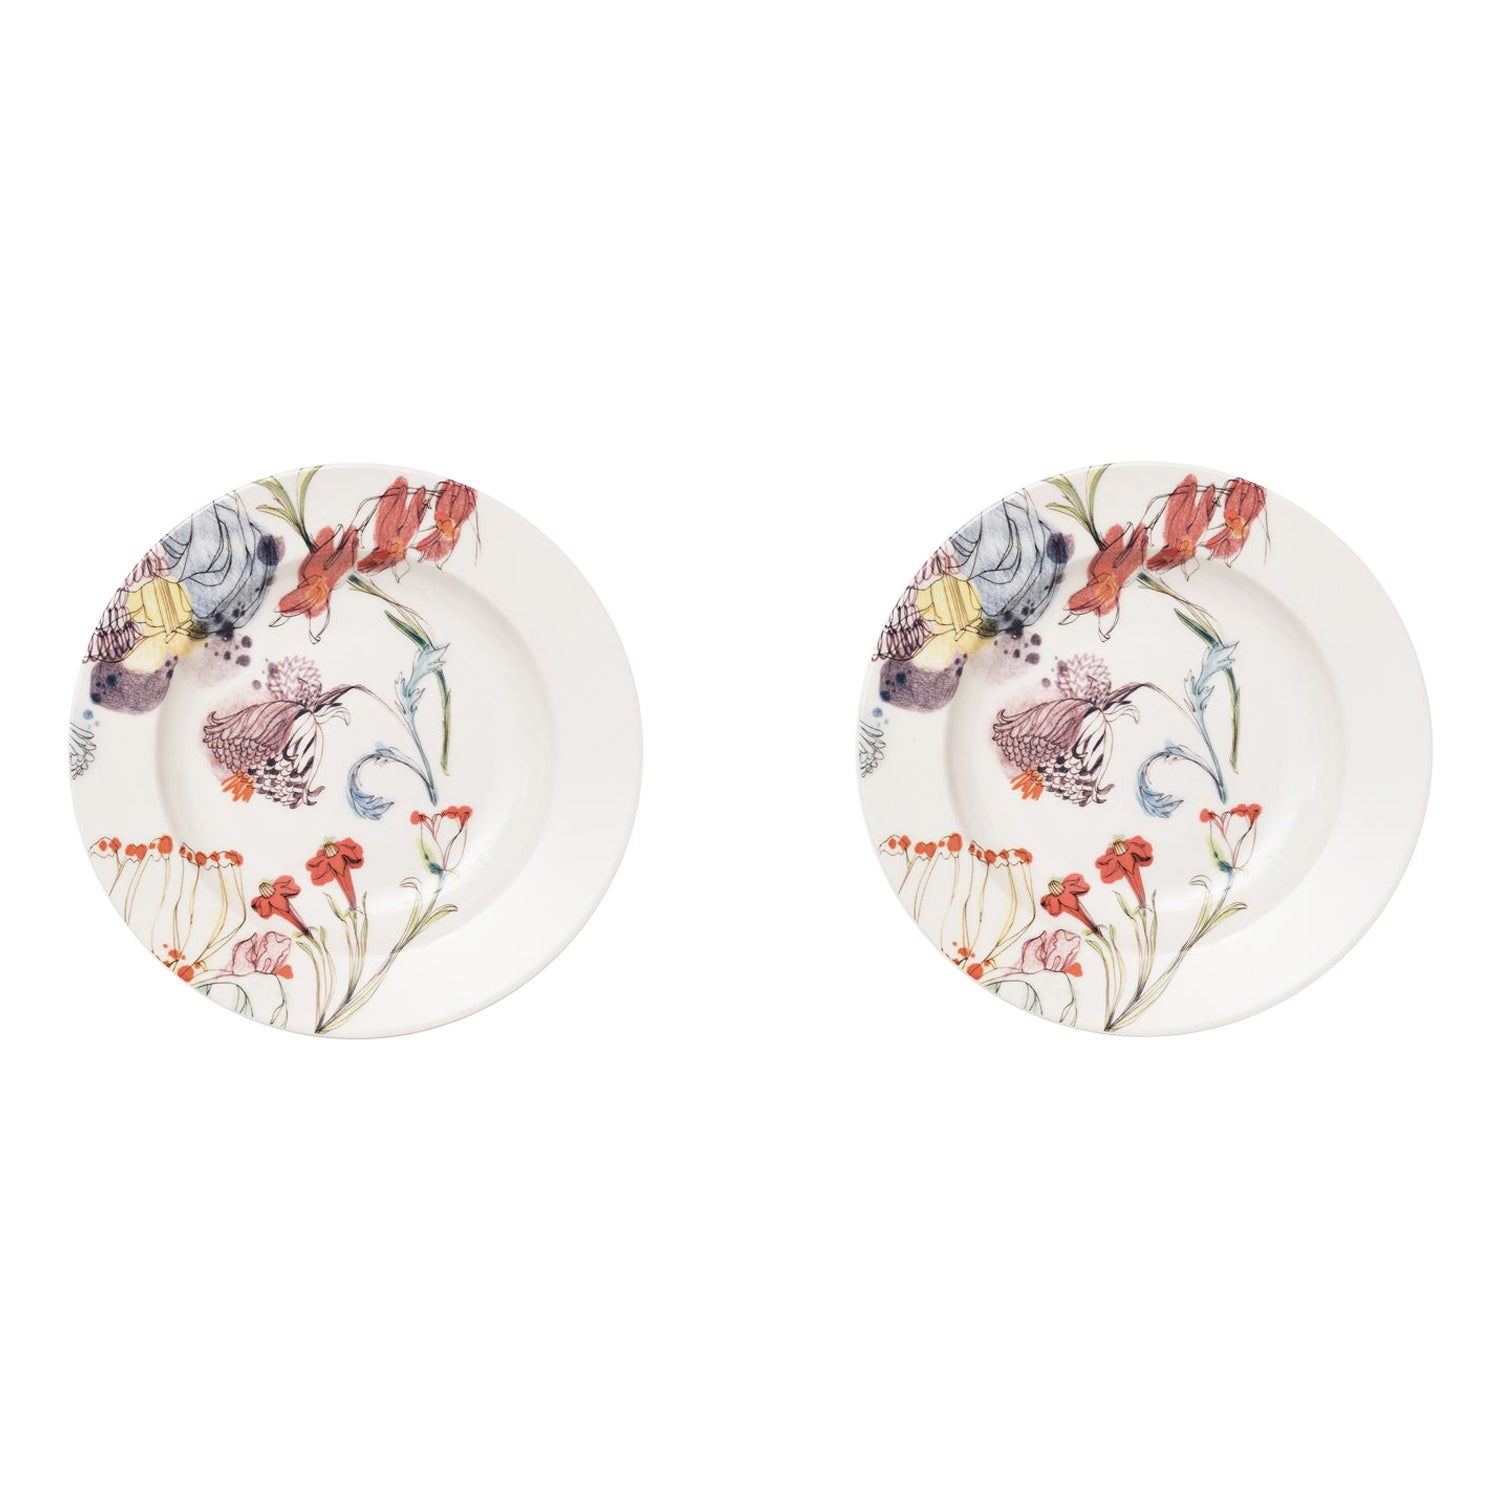 Grandma's Garden, Contemporary Porcelain Pasta Plates Set with Floral Design For Sale